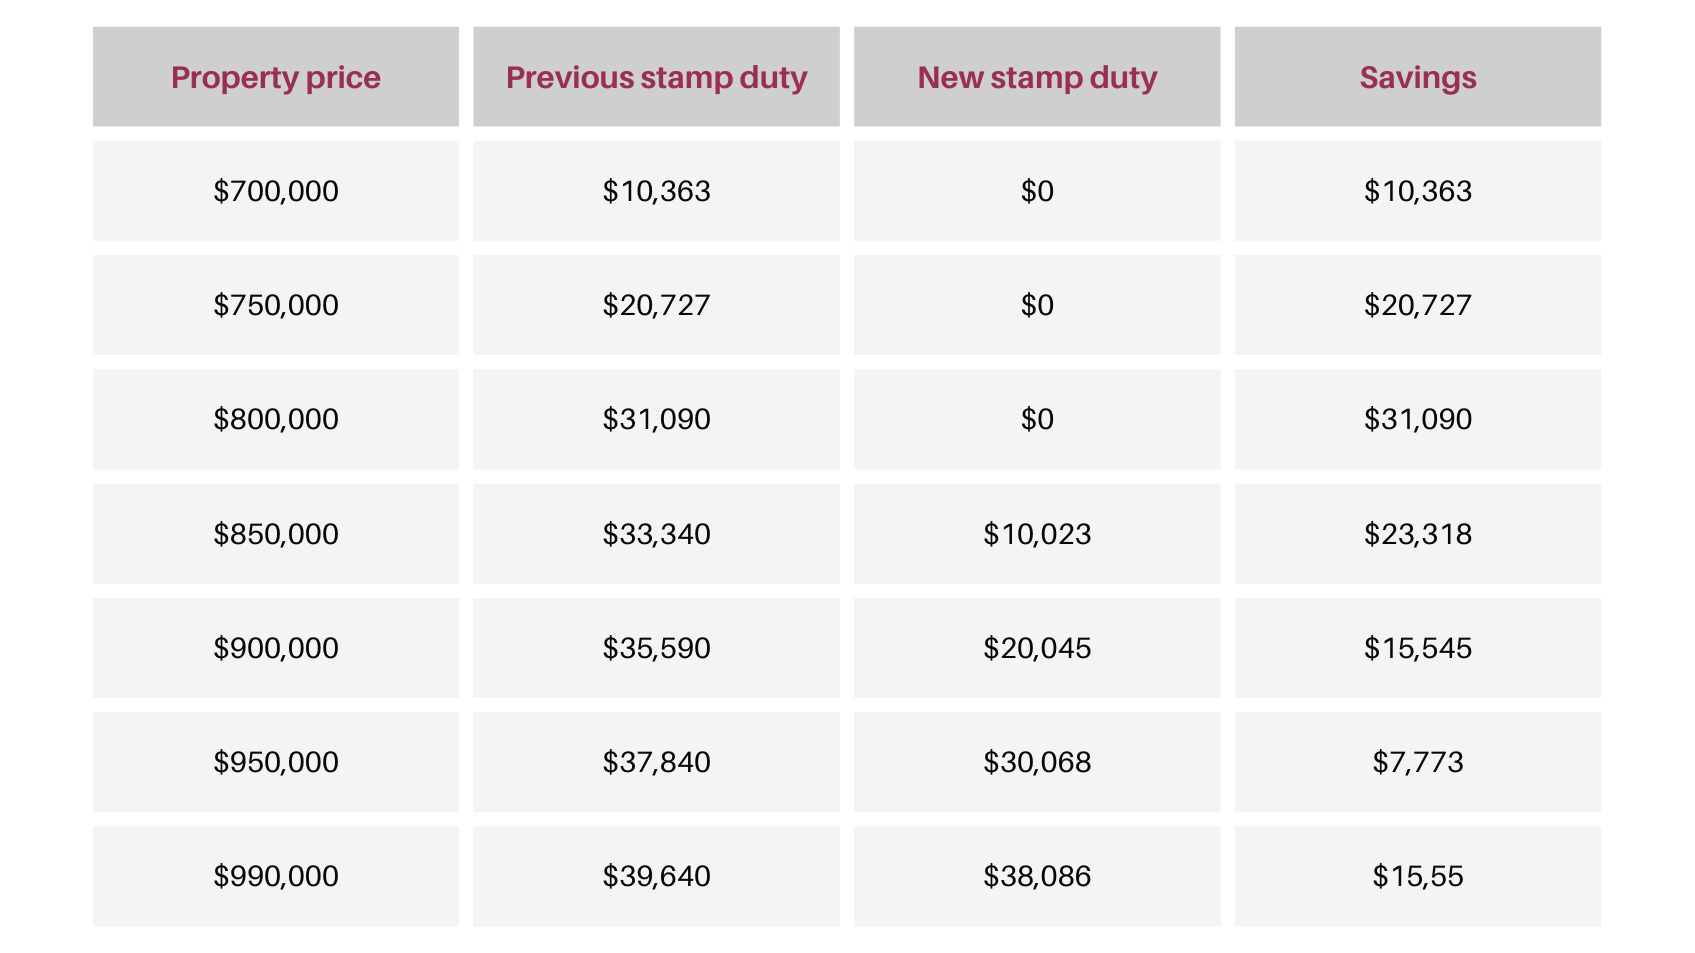 Stamp duty savings table